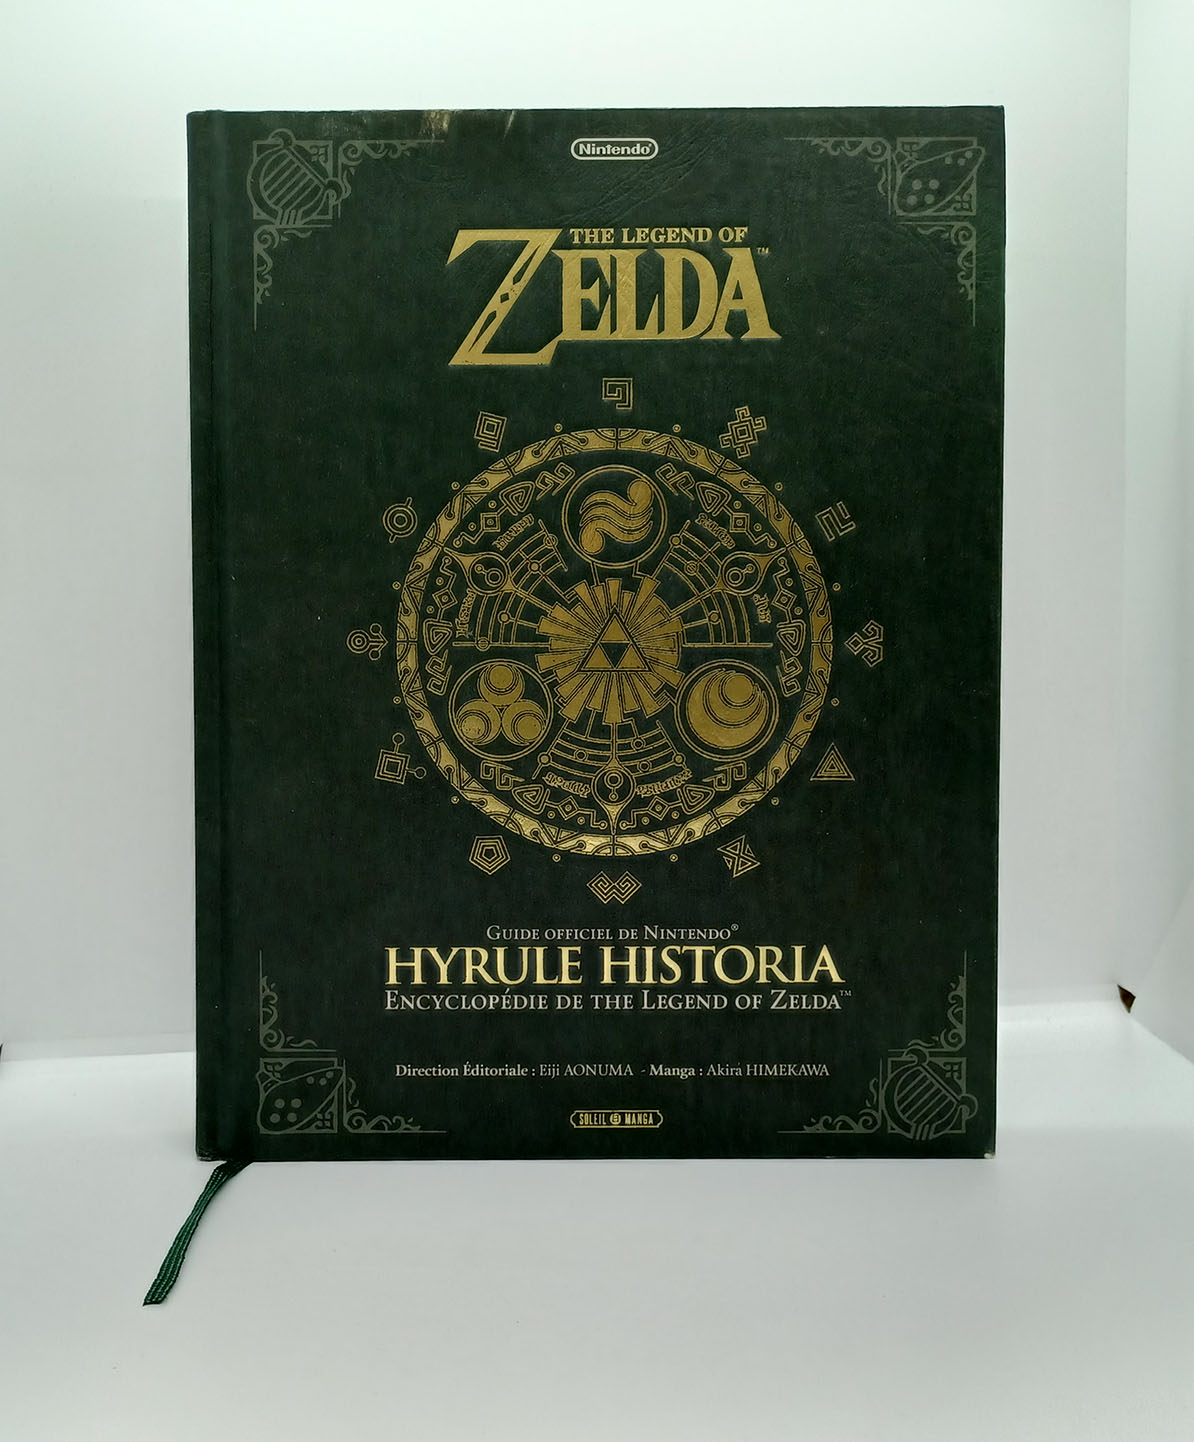 The Legend Of Zelda Guide officiel de Nintendo : The Legend of